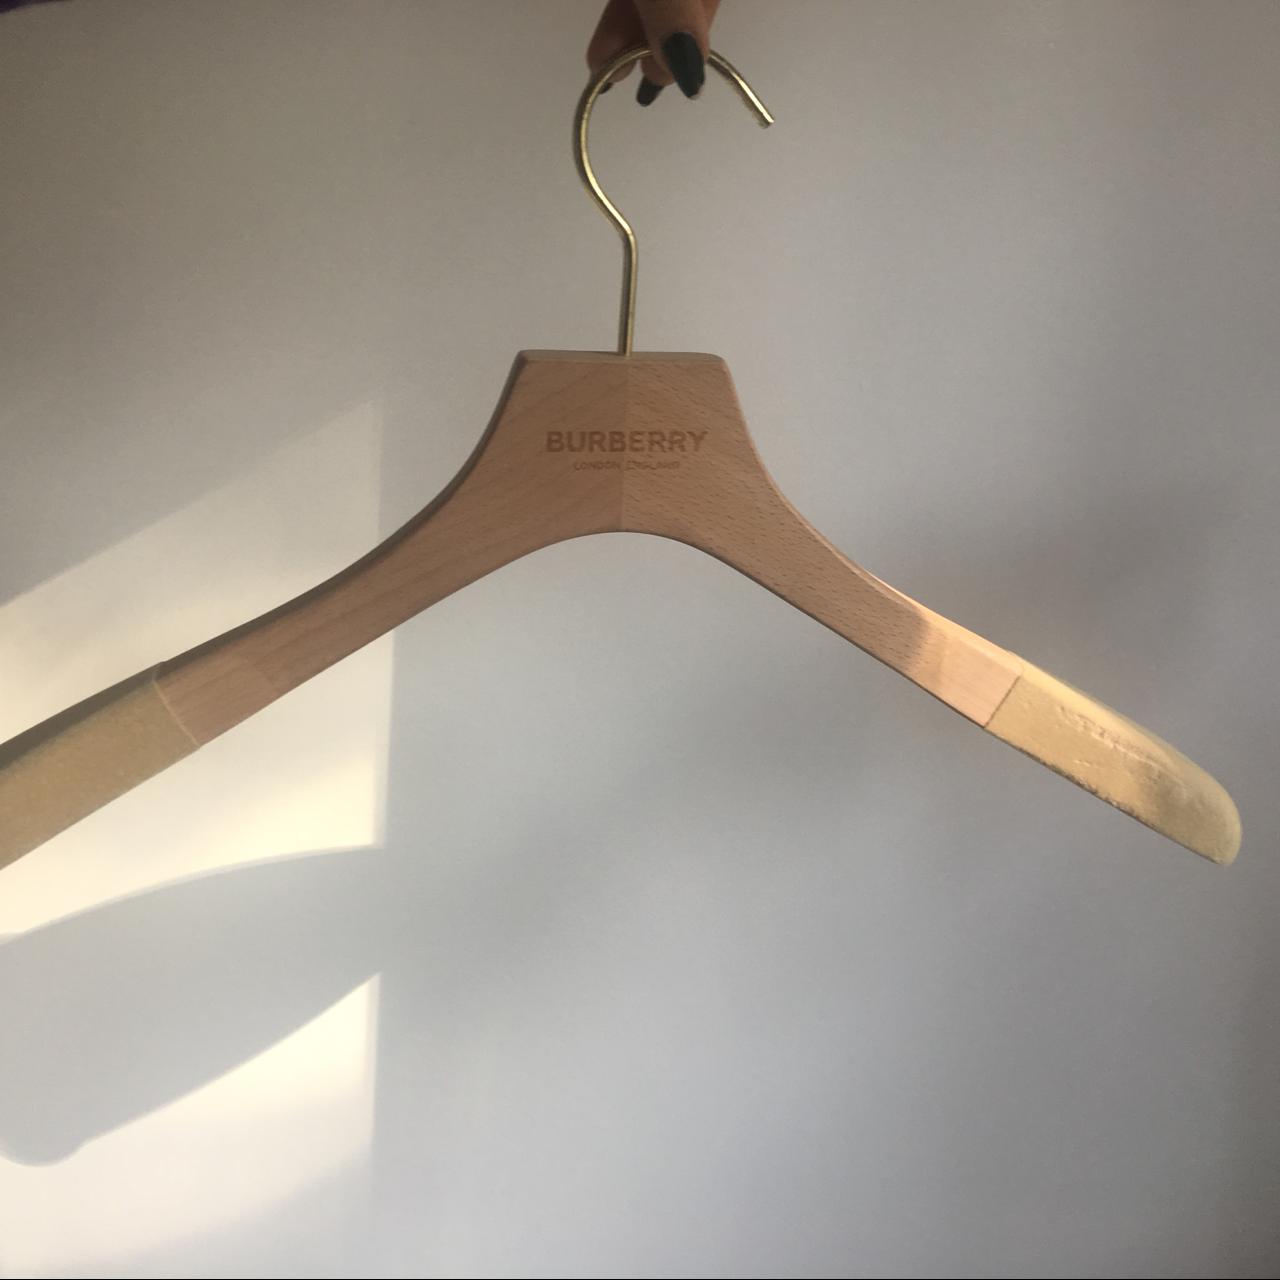 Luxury Burberry hanger for coats. Strong wood frame... - Depop